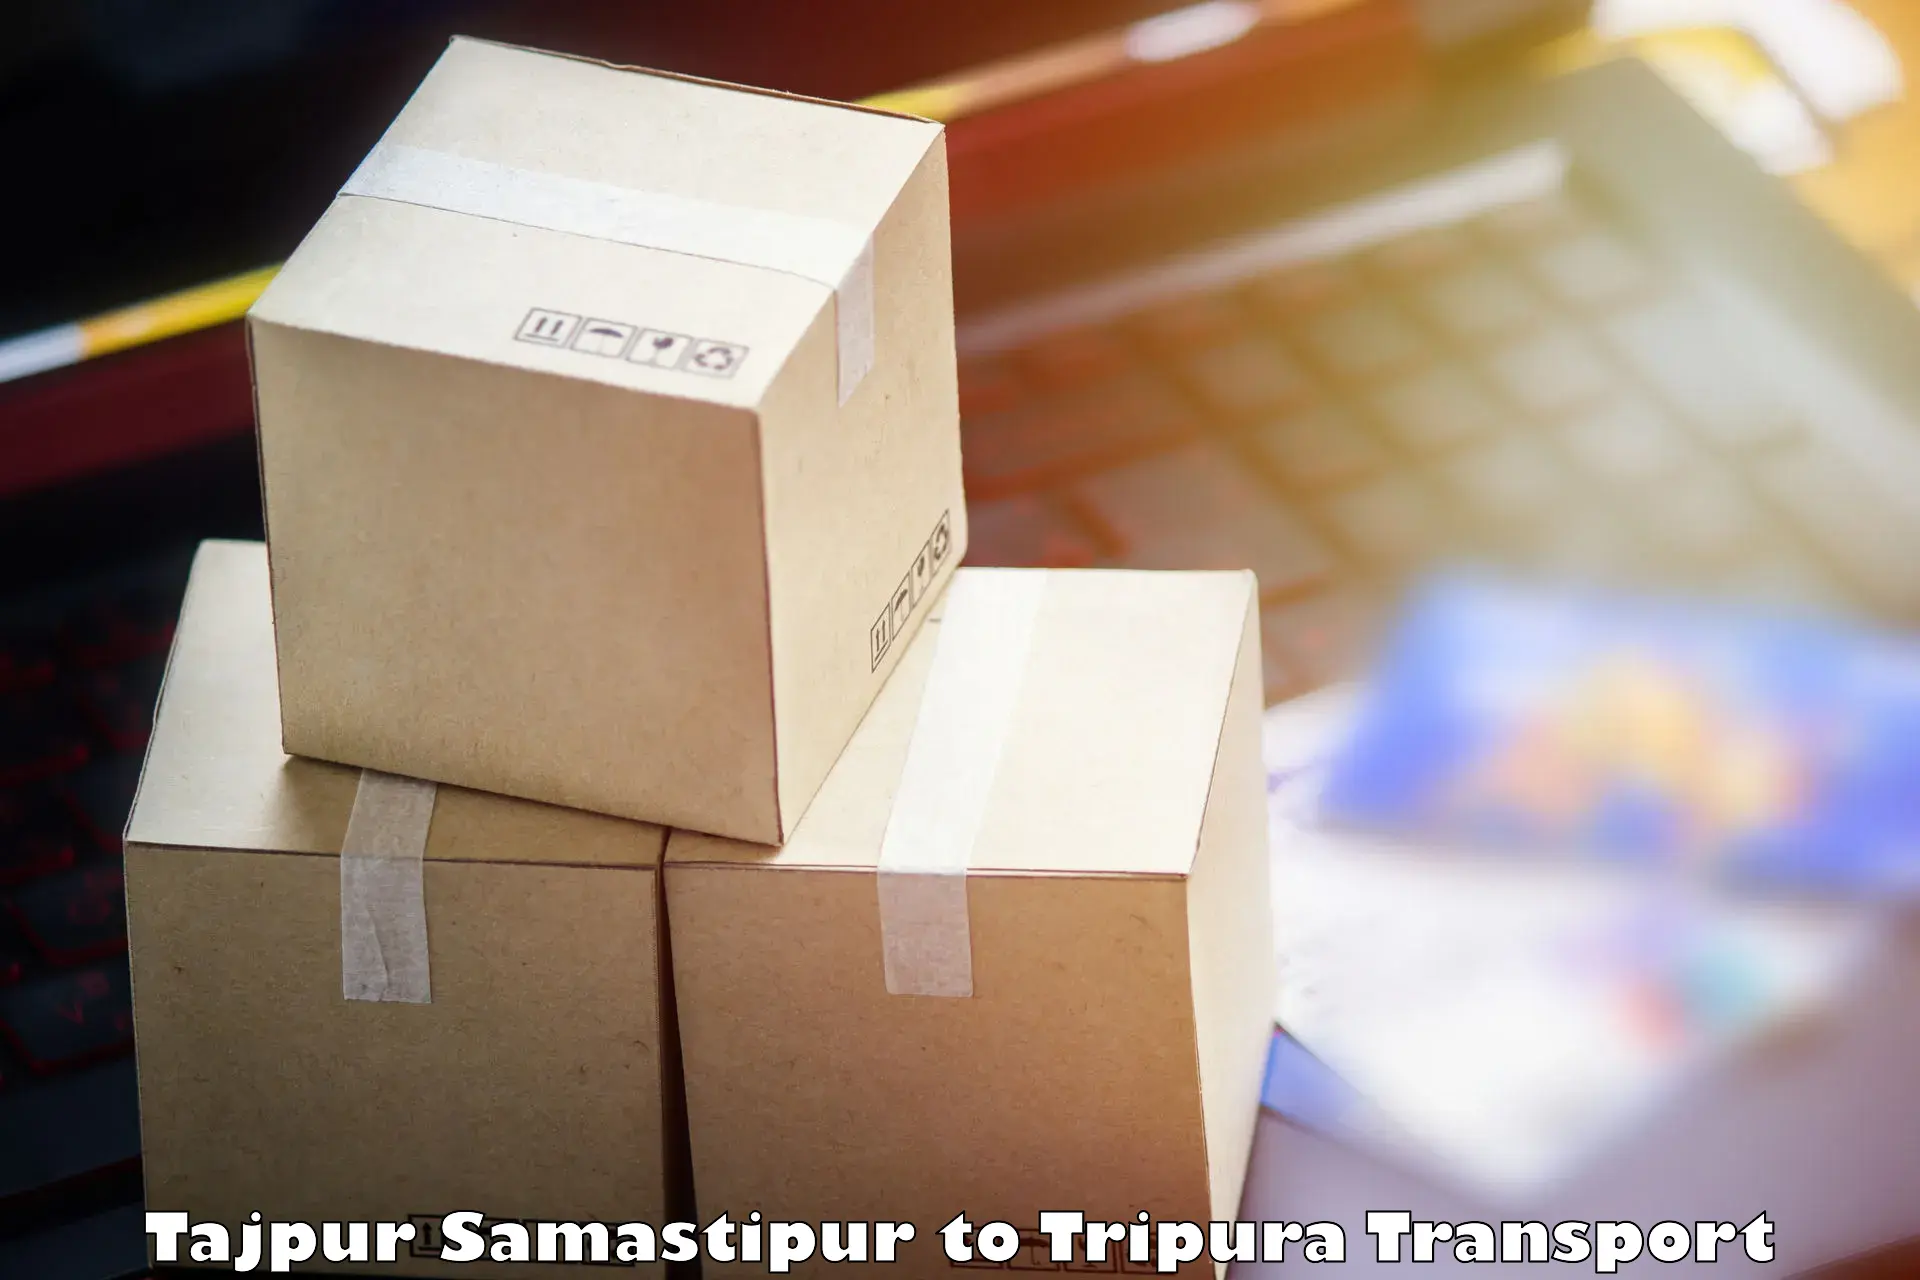 Parcel transport services Tajpur Samastipur to Manughat